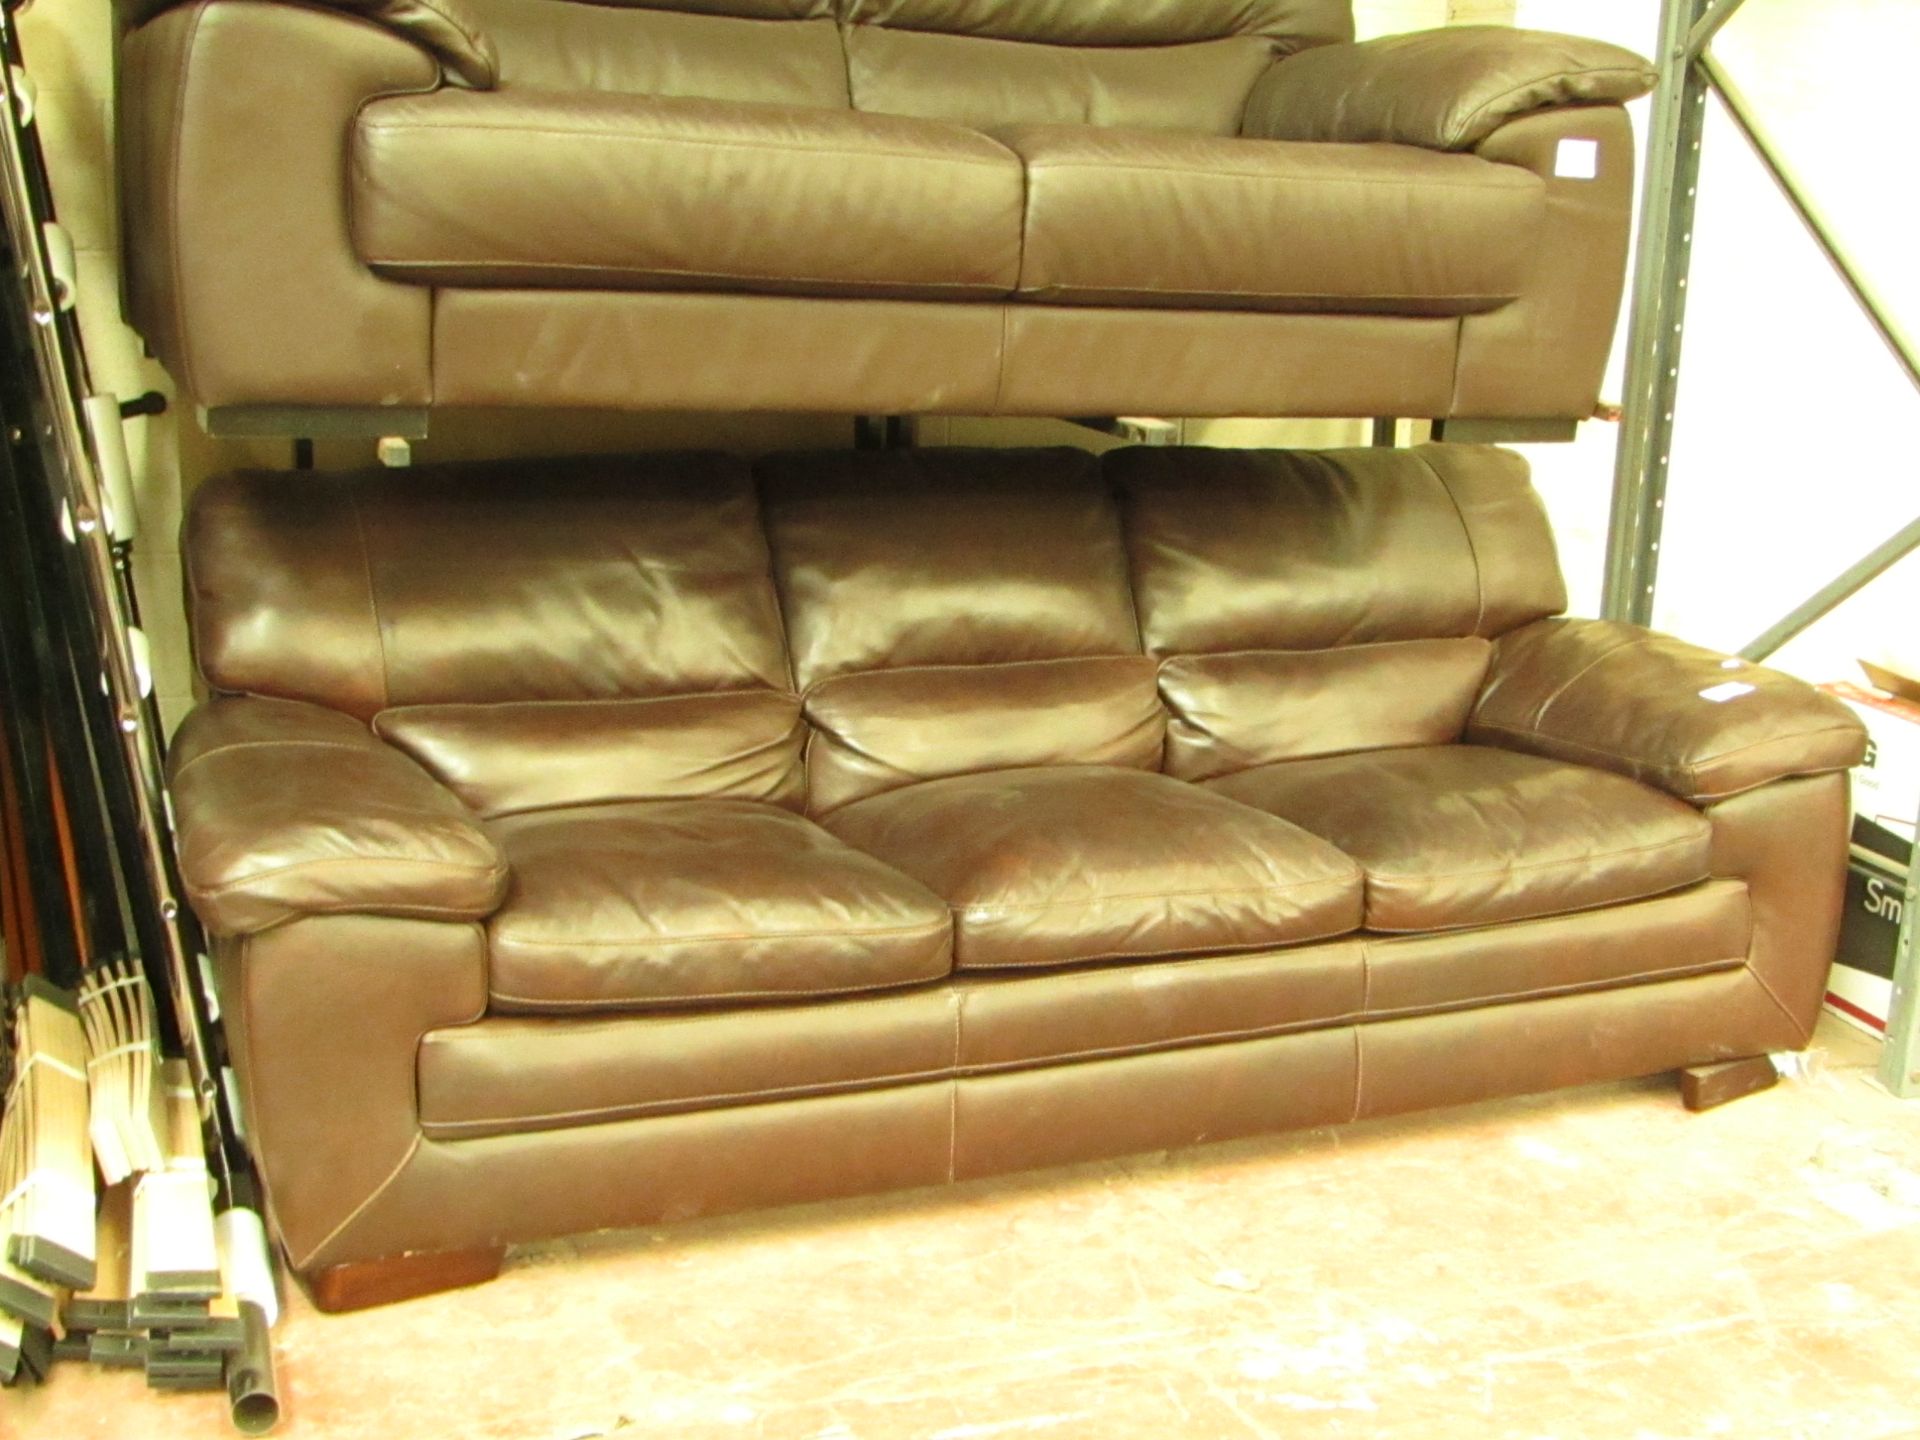 Costco 3 seater Brown leather sofa, no major damage